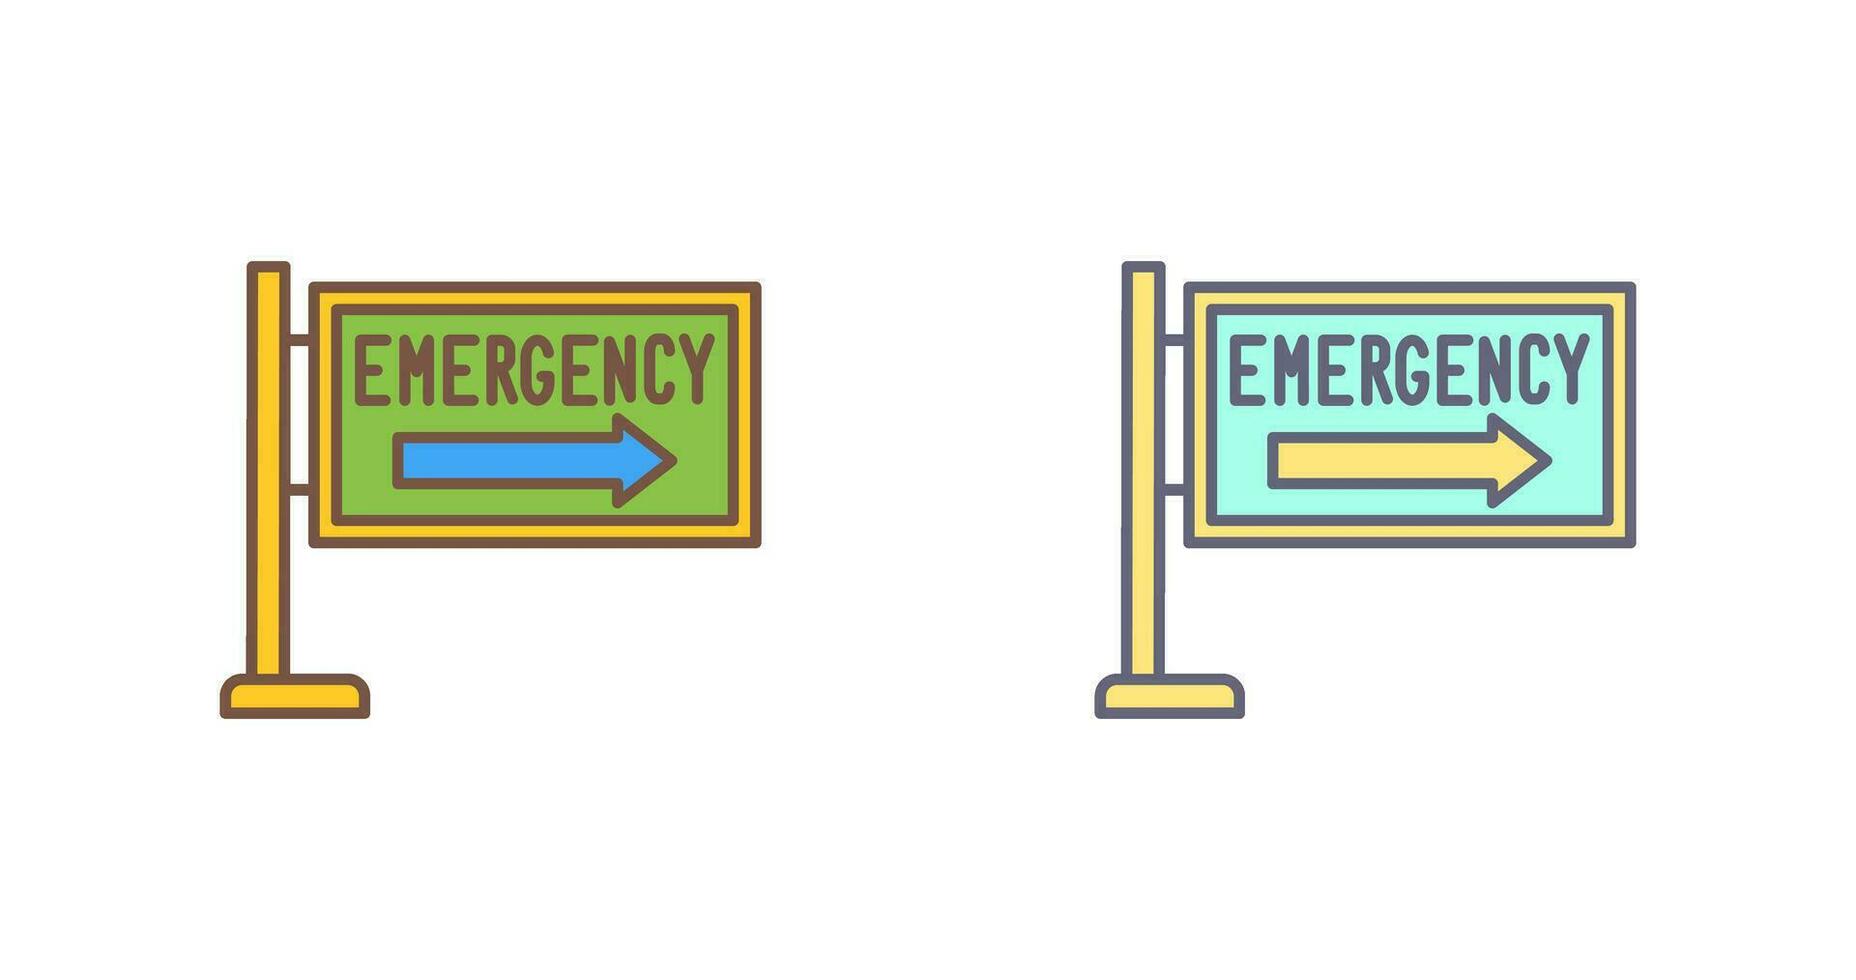 emergenza cartello vettore icona